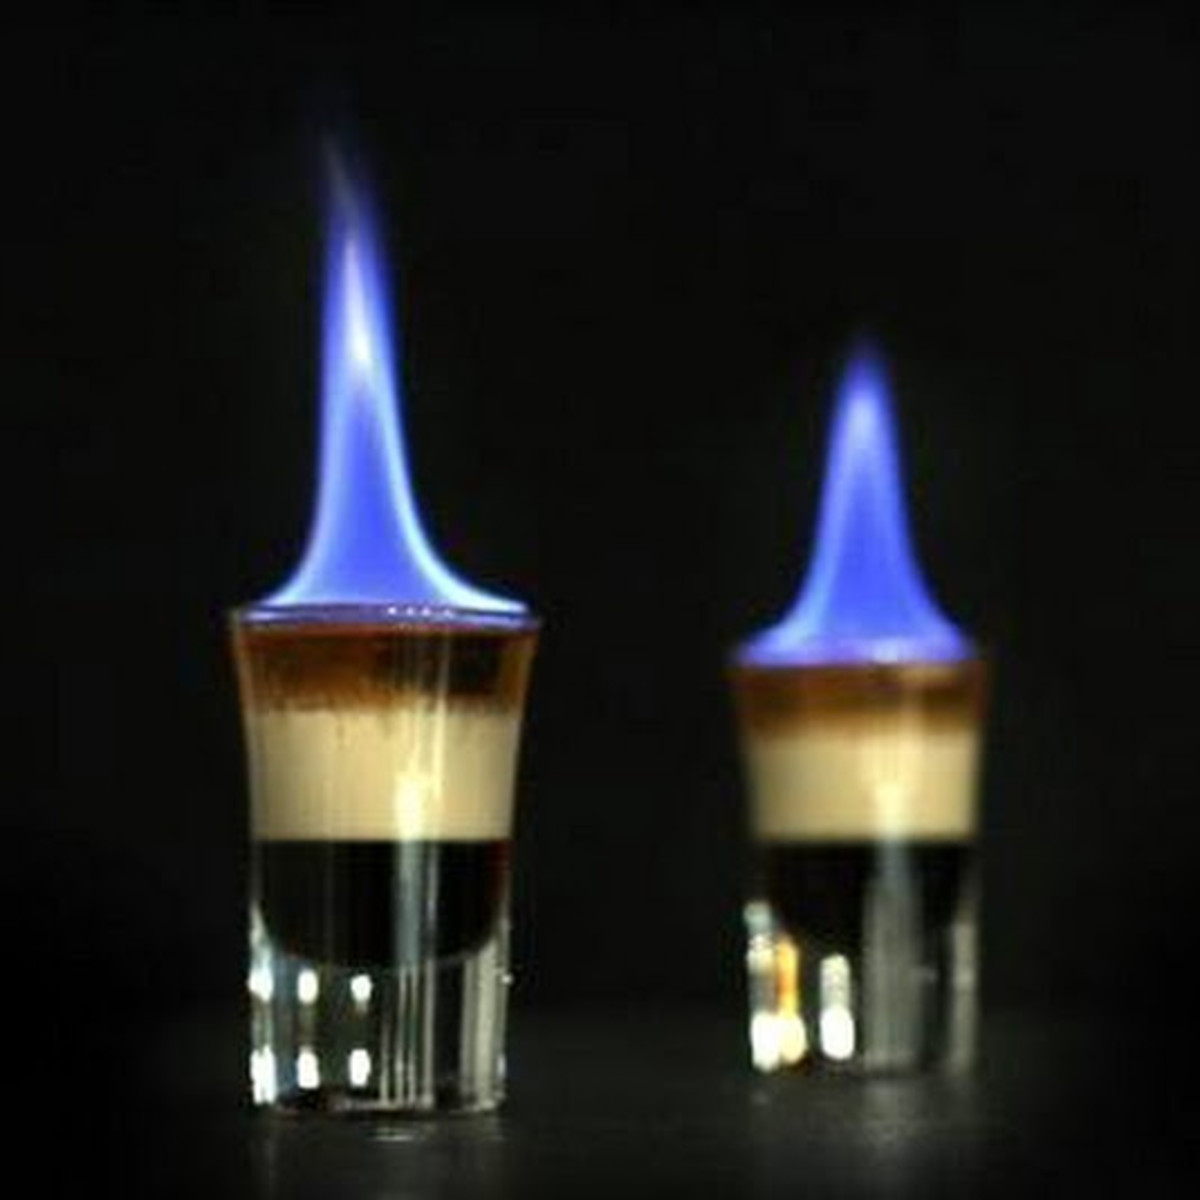 bonfire-night-cocktail-recipes-burns-night-guy-fawks-cocktails